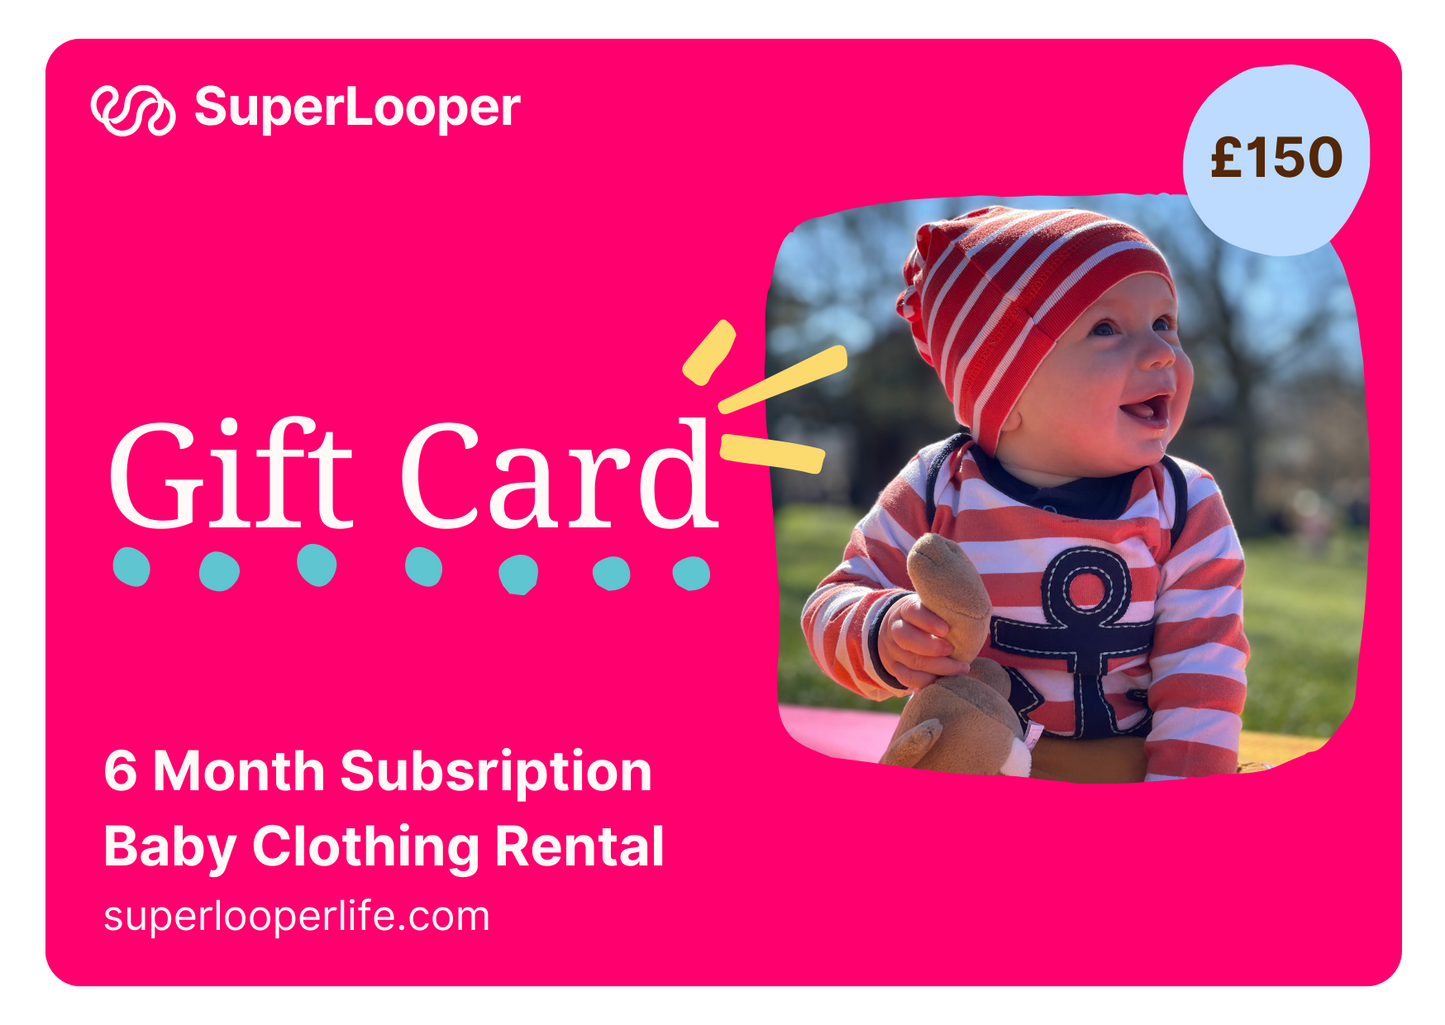 Superlooper gift card